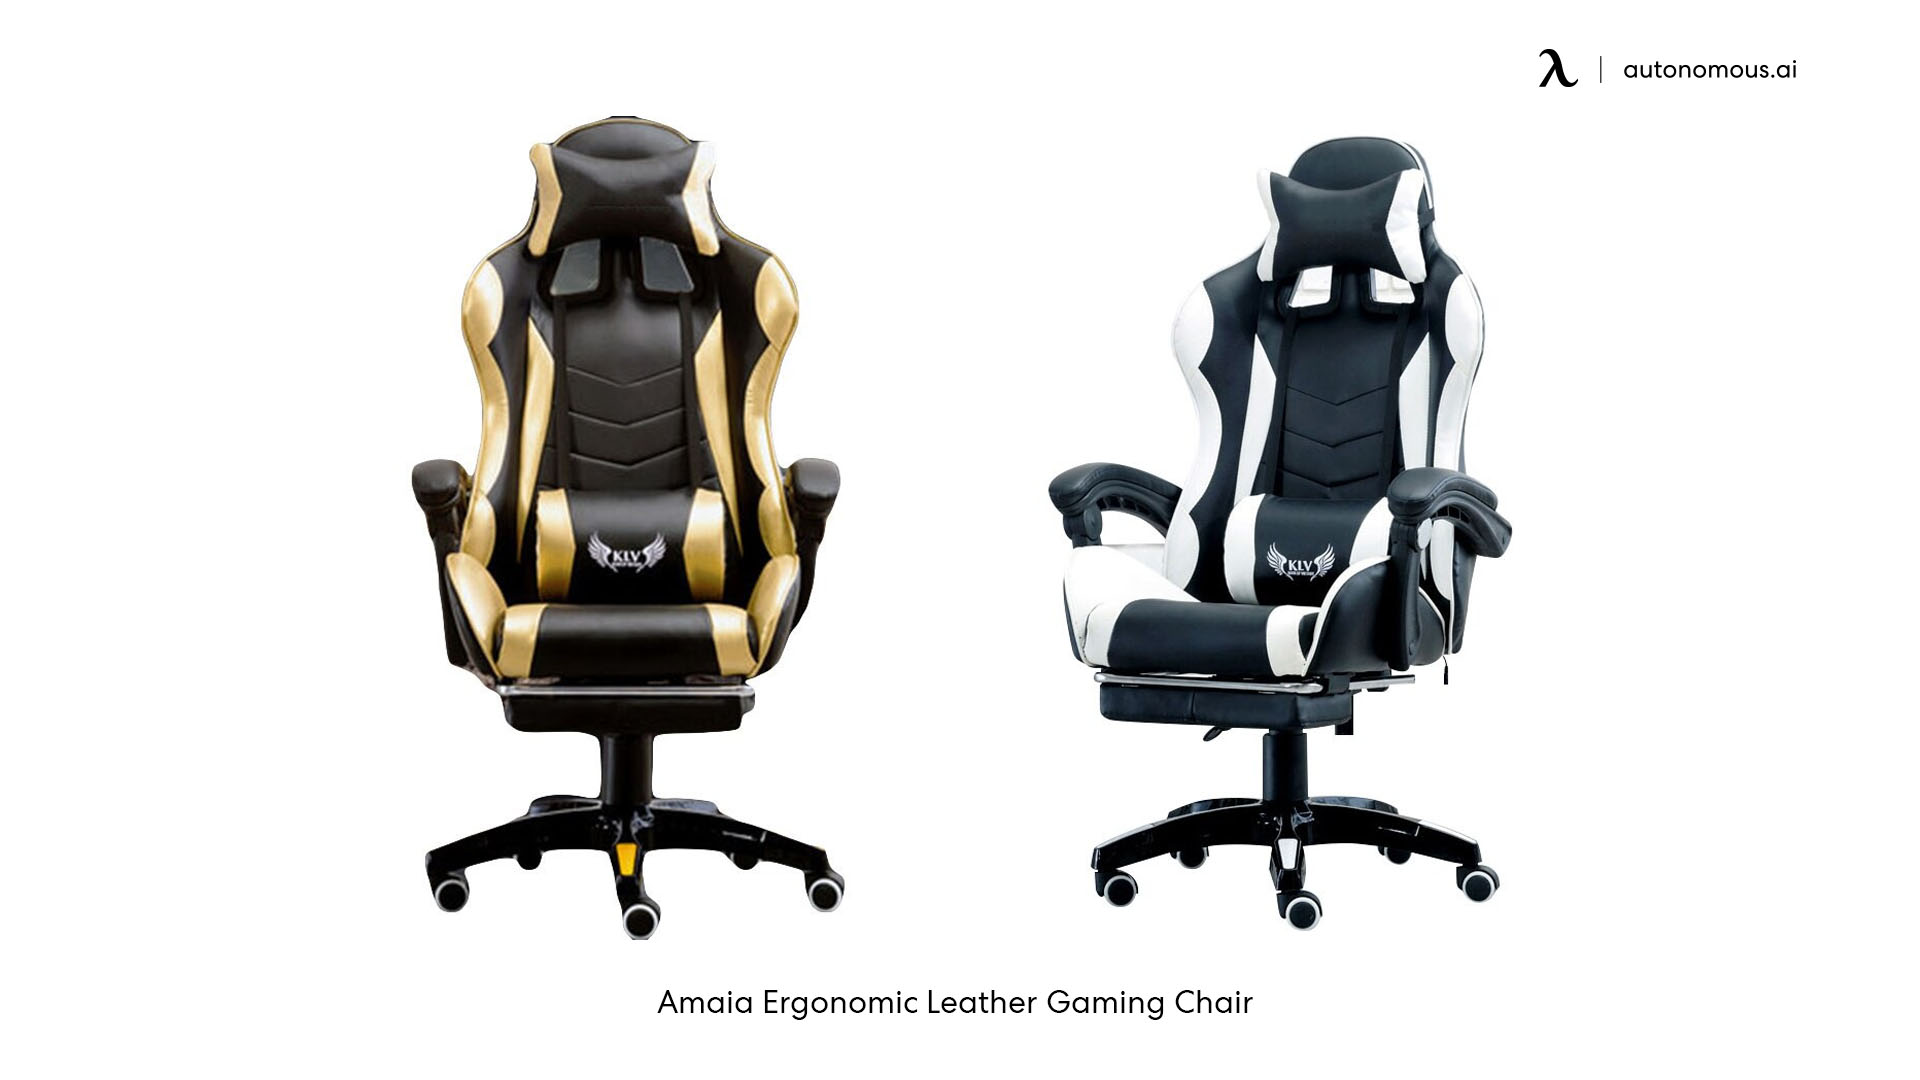 Amaia Ergonomic Leather Gaming Chair